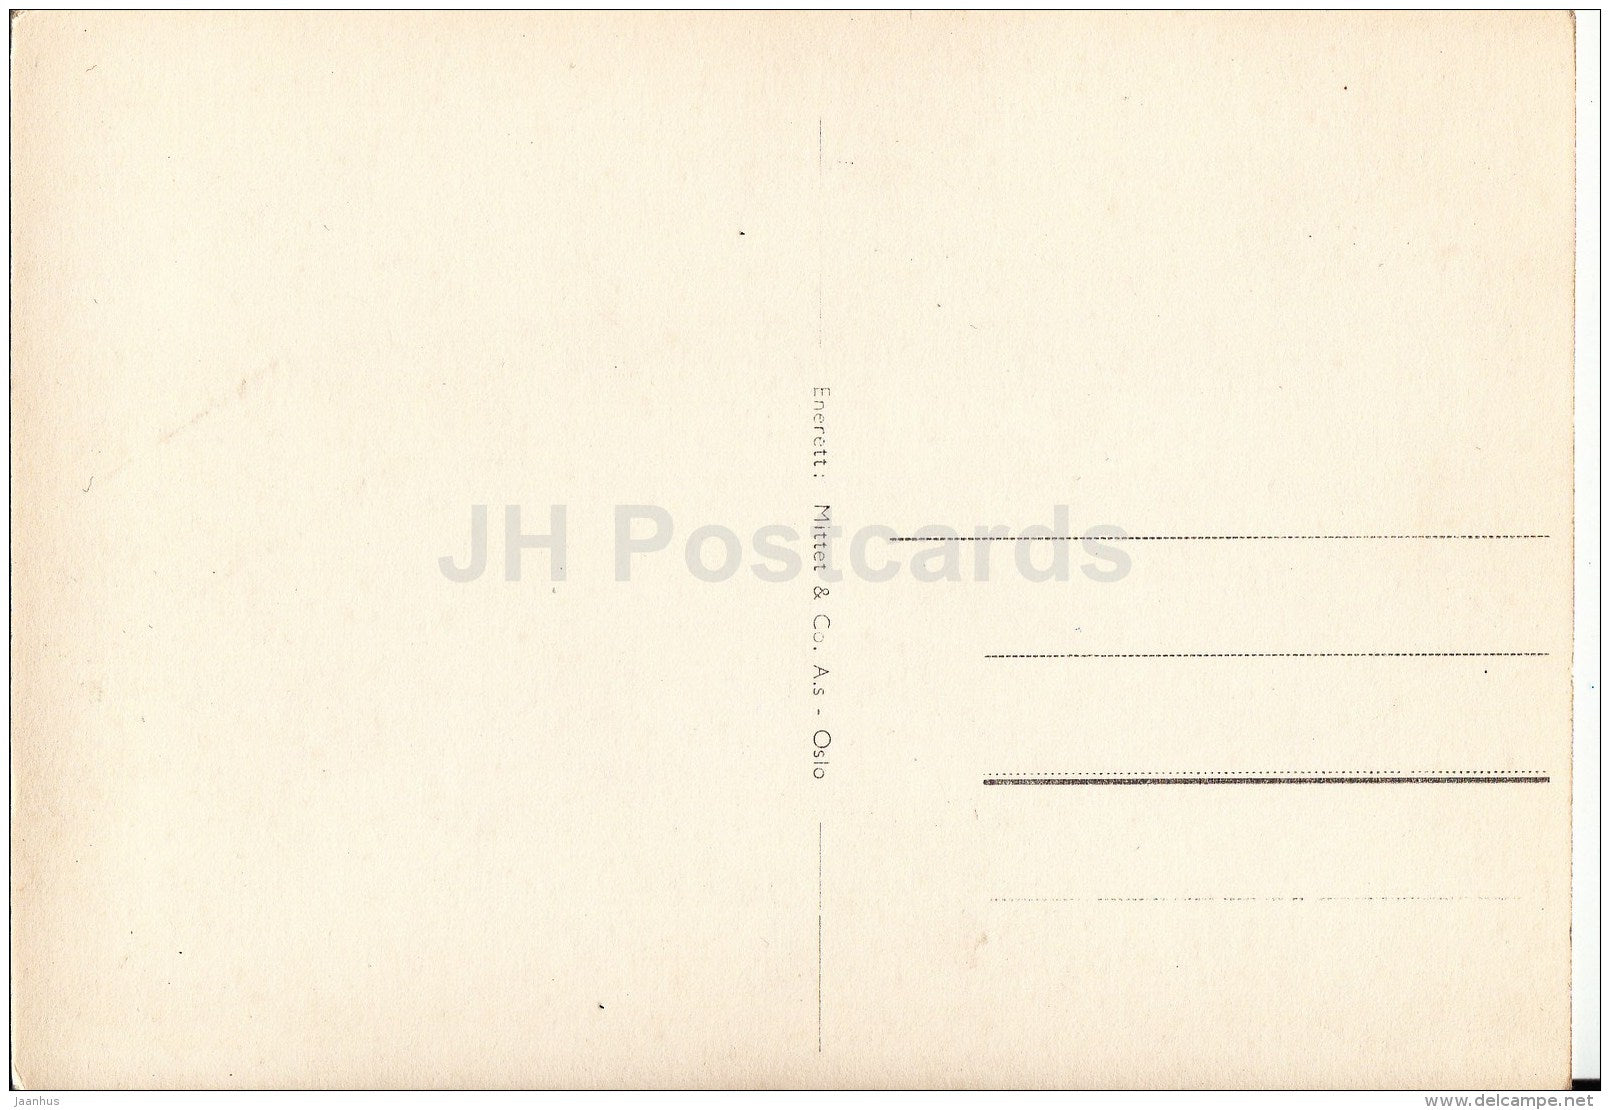 Norge - Skjomen - Fossene Storefall og Lillefall - 2841/11 - Mittel - Norway - unused - JH Postcards